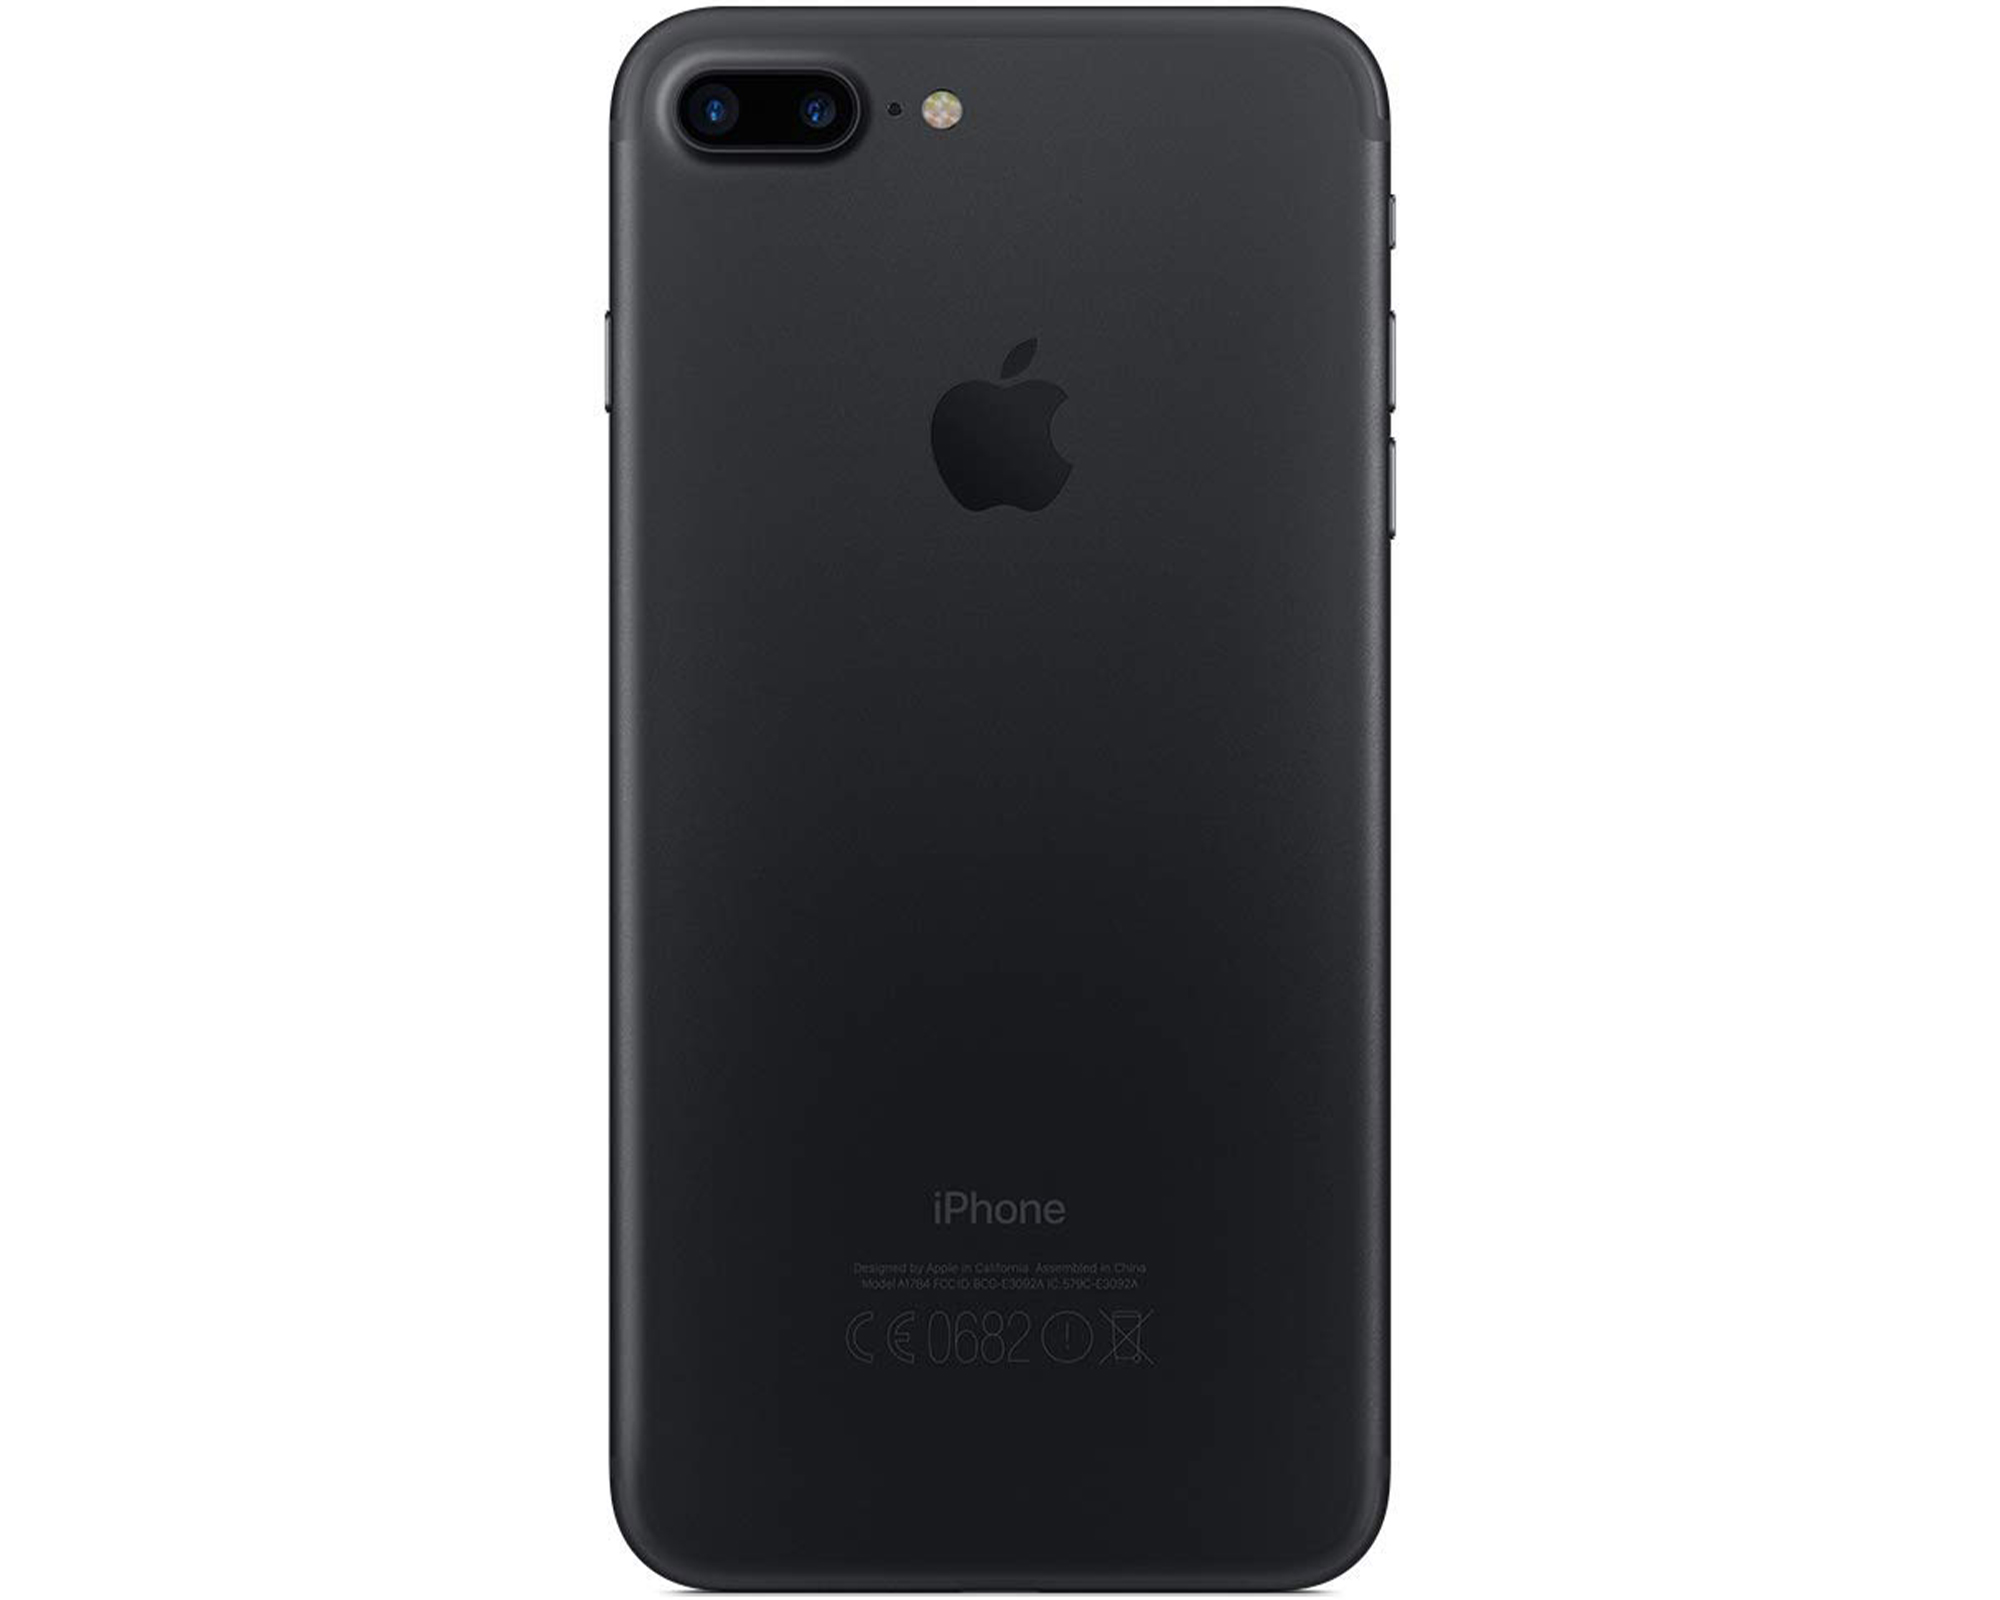 Restored Apple iPhone 7 Plus, GSM Unlocked 4G LTE- Black, 32GB (Refurbished) - image 2 of 7